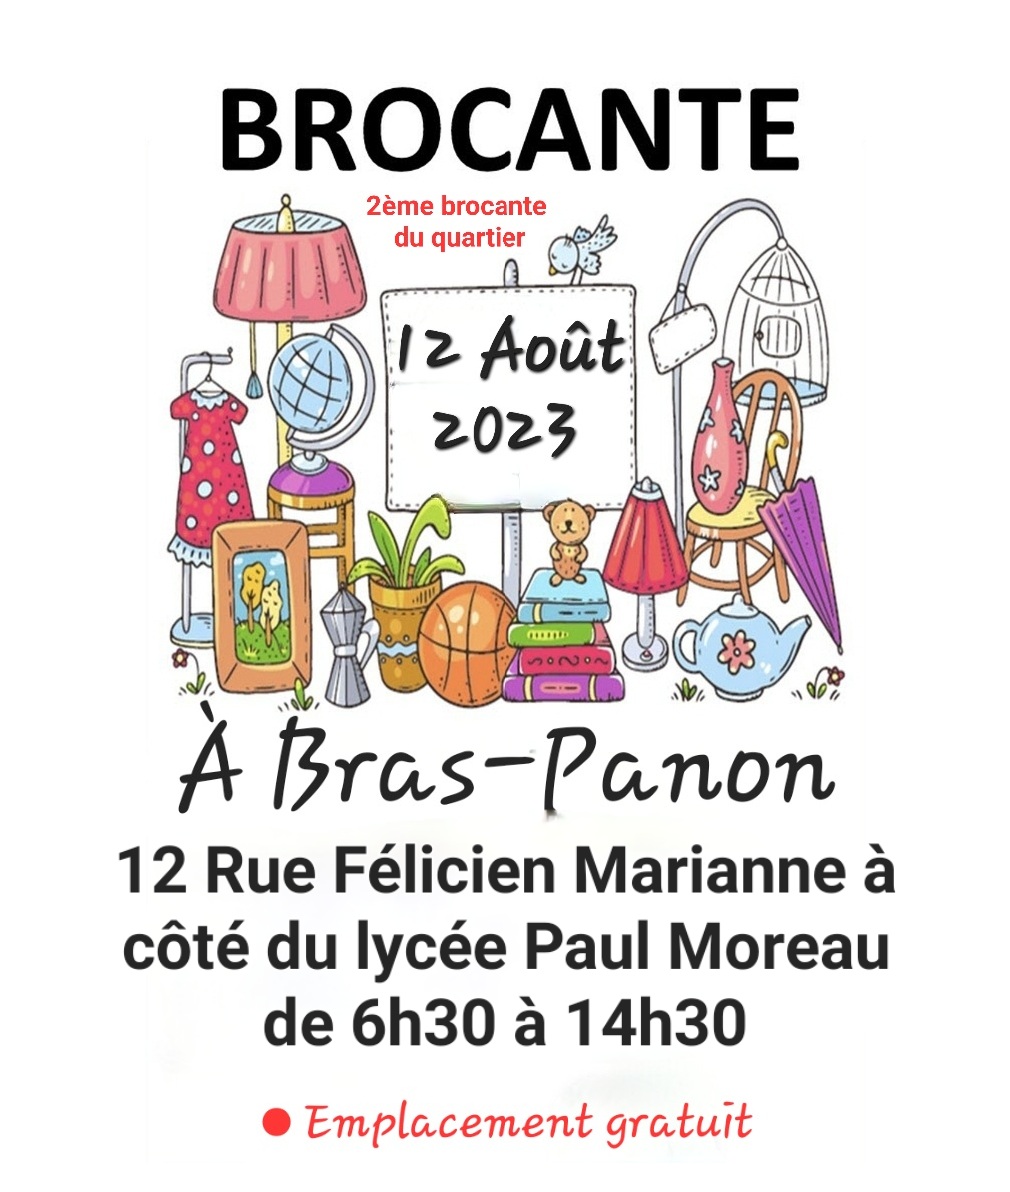 BROCANTE – Rue Félicien Marianne